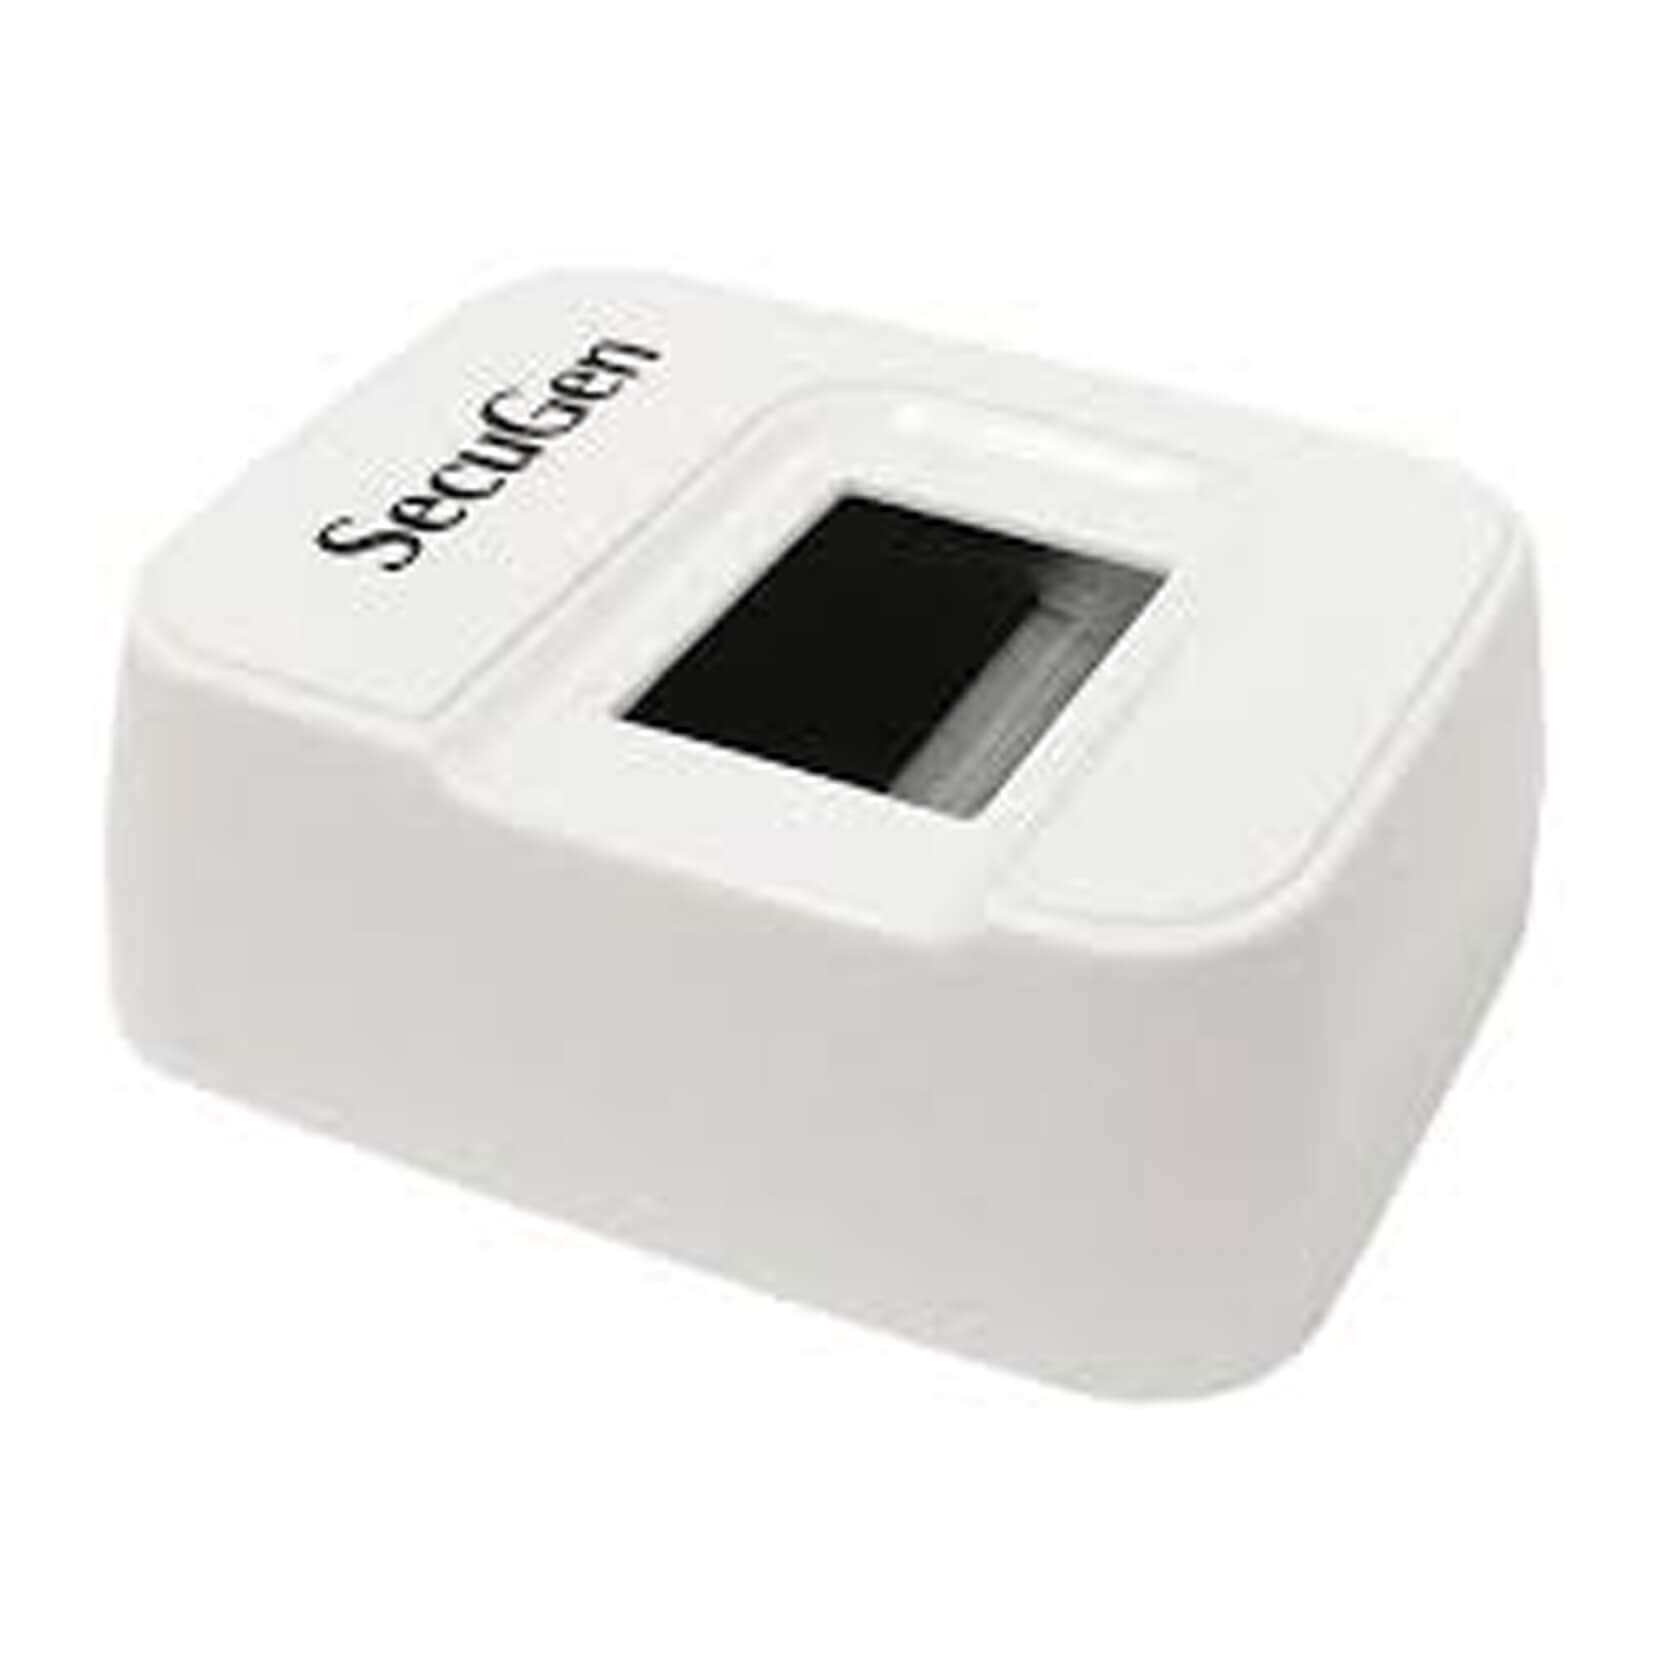 SecuGen hamster pro 10 biometric scanner